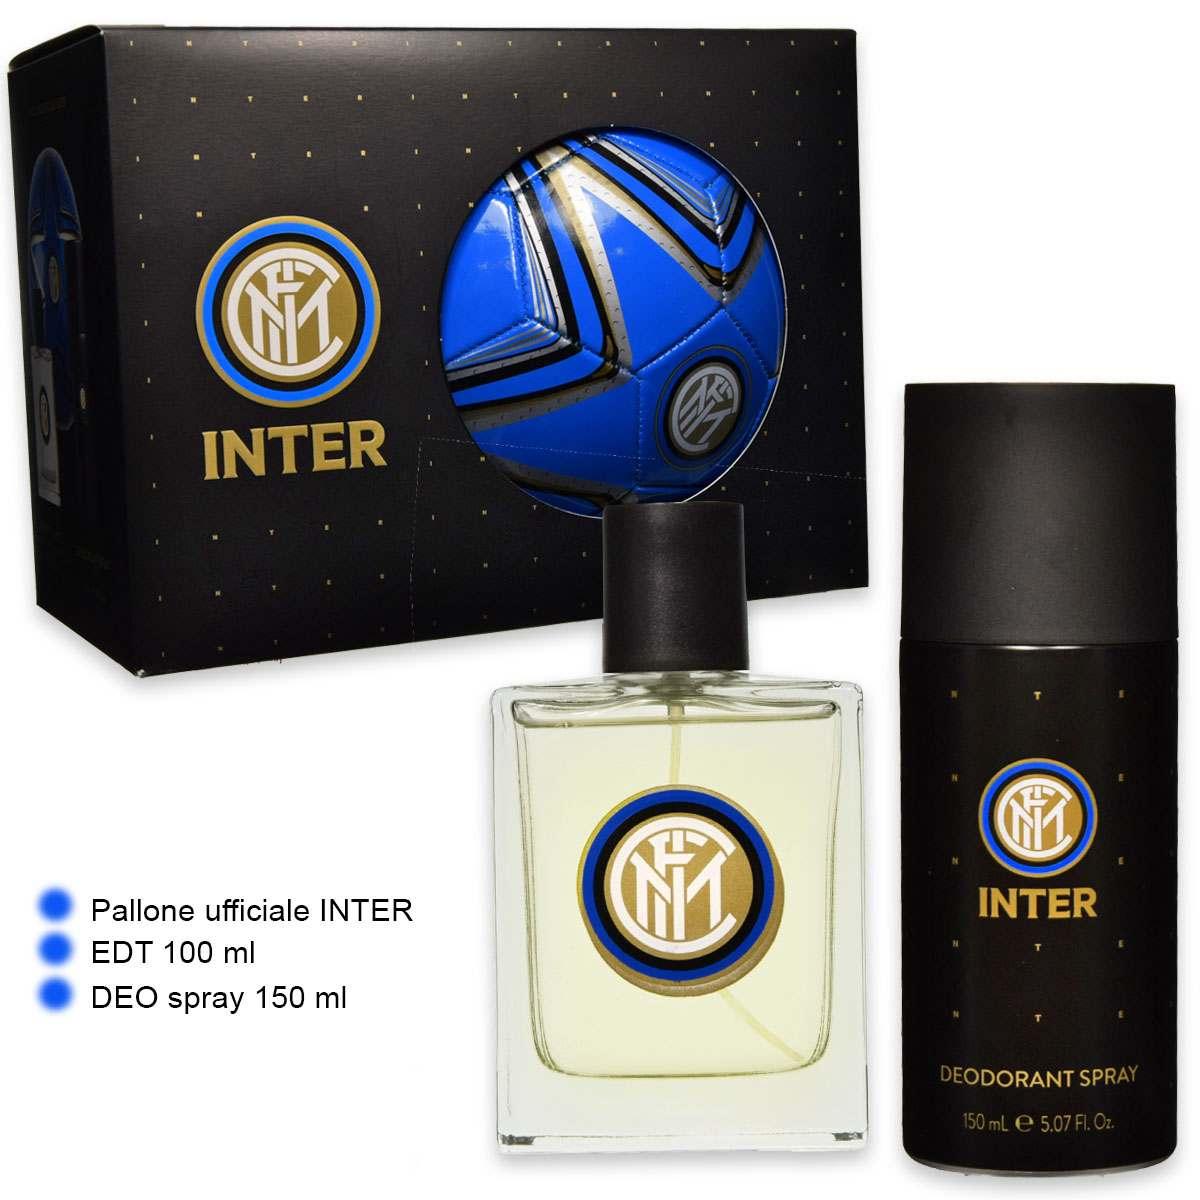 Inter edt 100ml + deo spray150ml + pallone